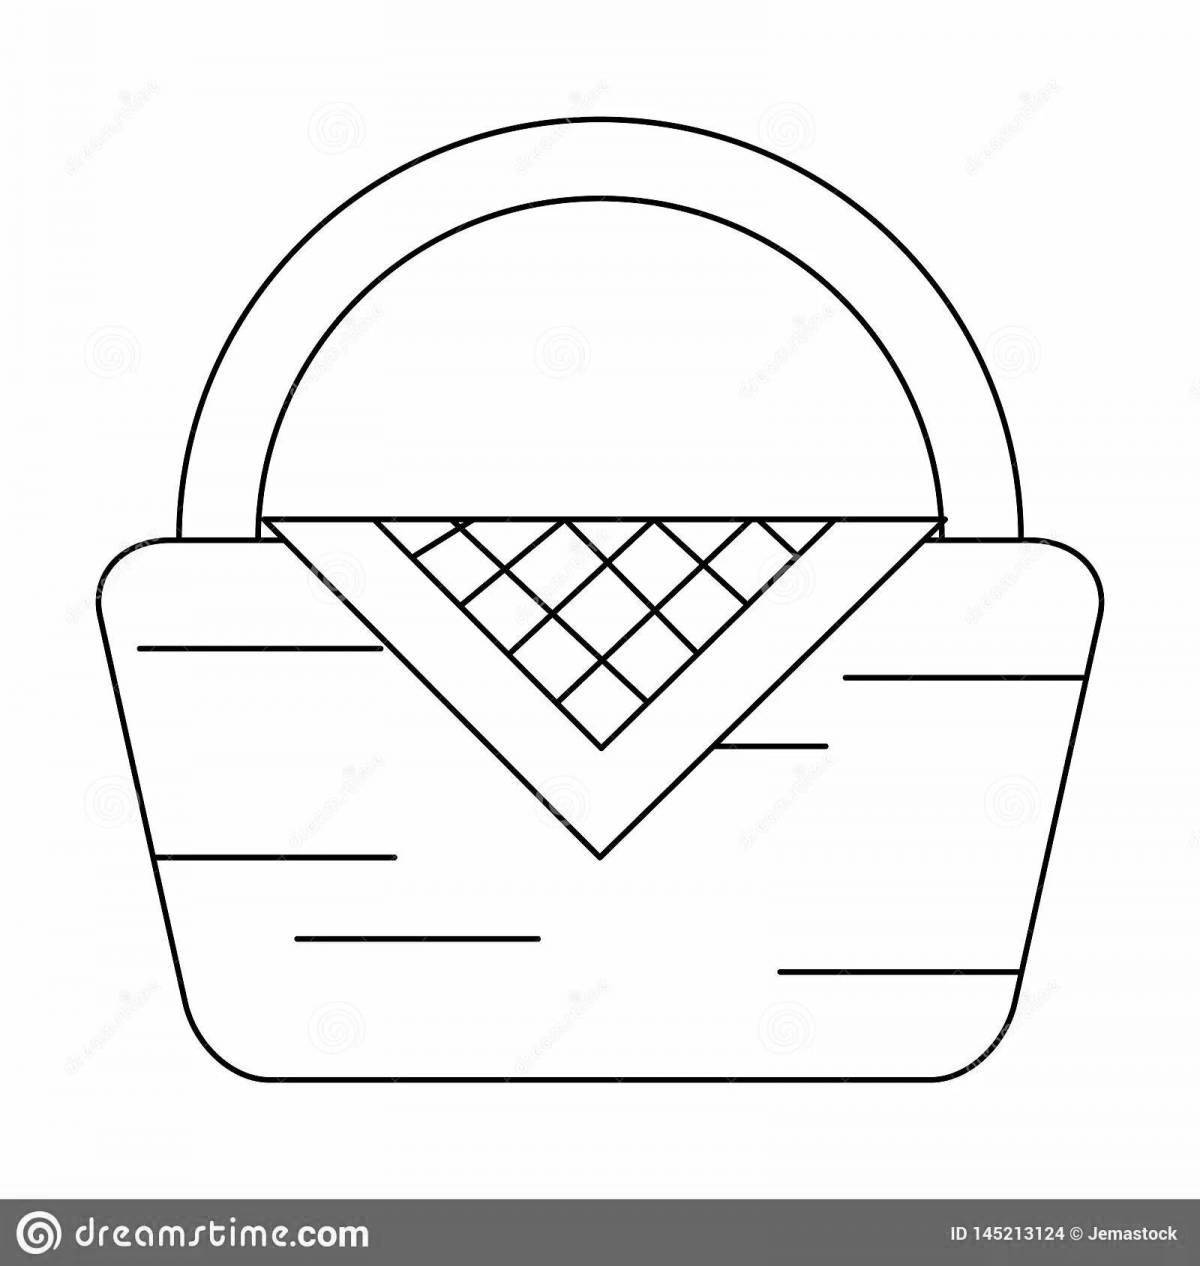 Adorable picnic basket coloring page